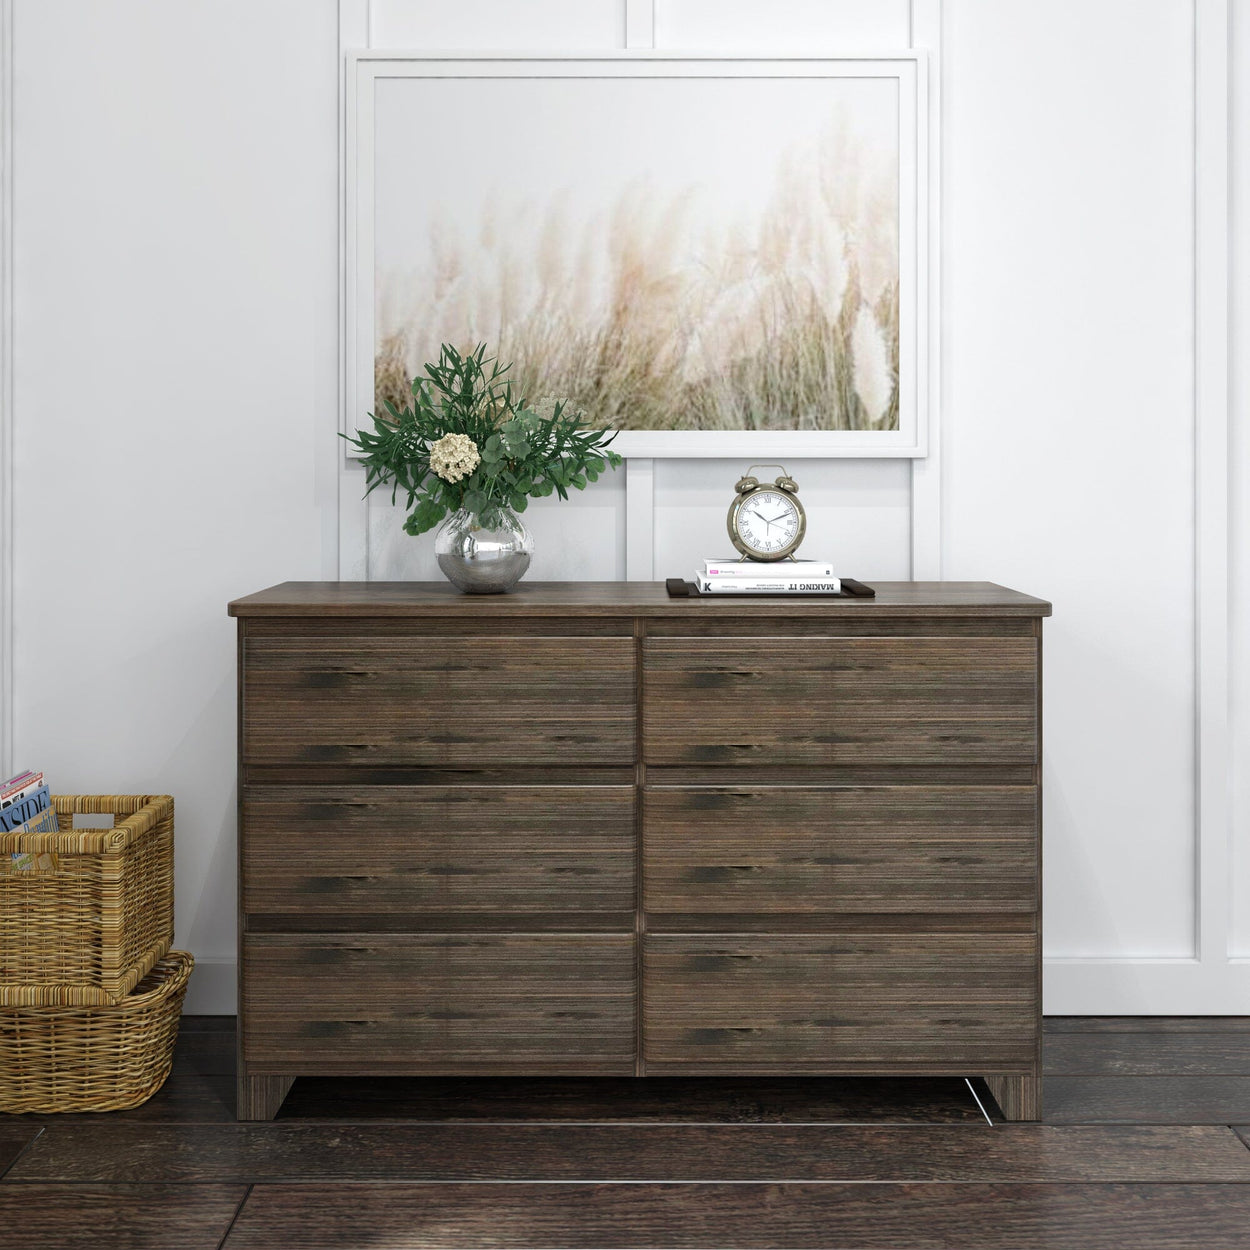 190006-181 : Furniture K/D 6 Drawer Dresser w/ metal drawer glides (52"L x 15.75"W x 32.75"H), Barnwood Brown